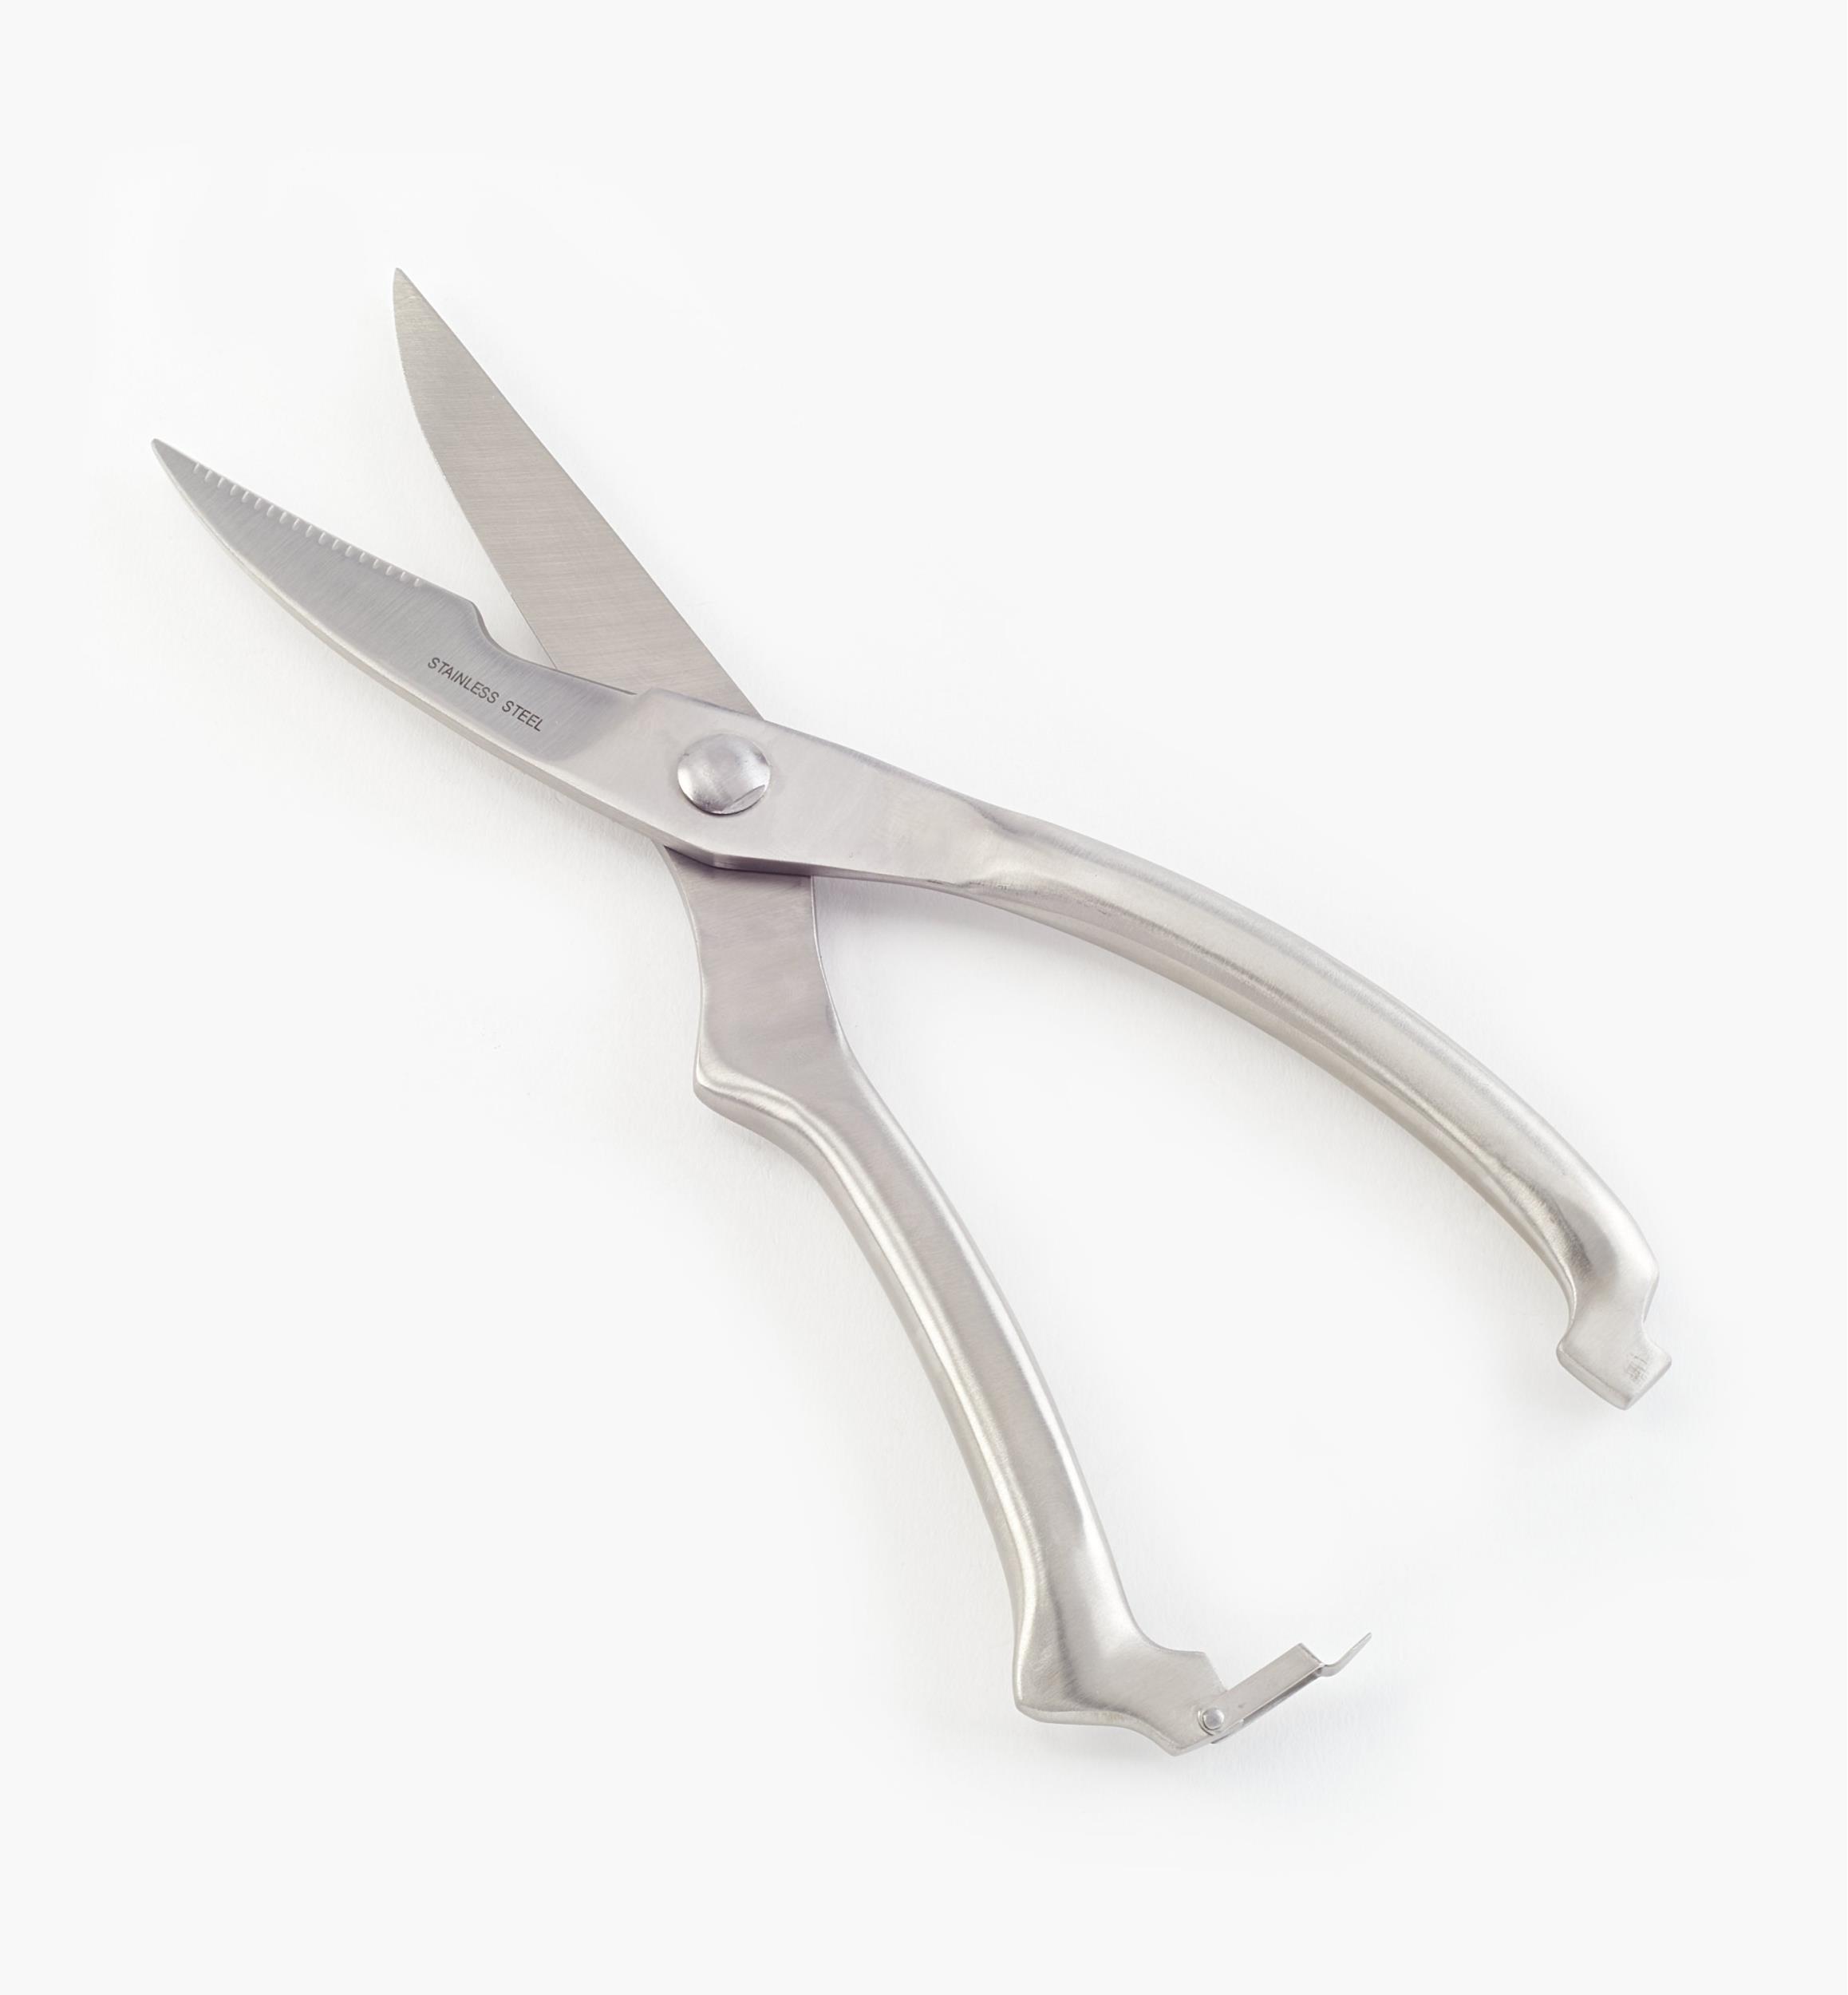 Professional kitchen Scissors Stainless Steel – Vital Industries